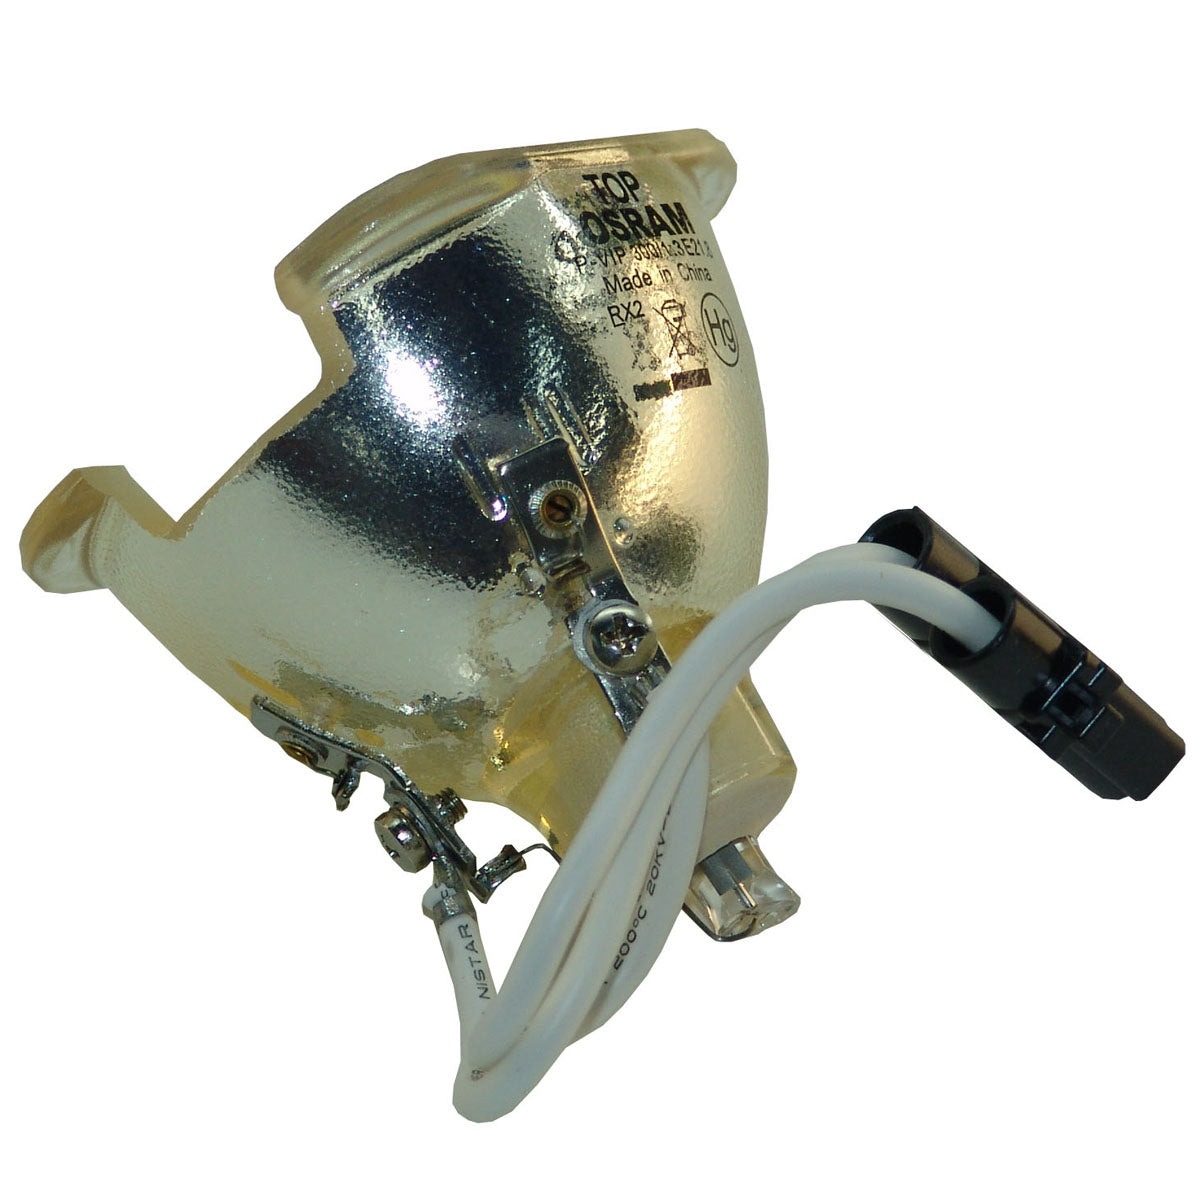 PLUS 28-057 Osram Projector Bare Lamp